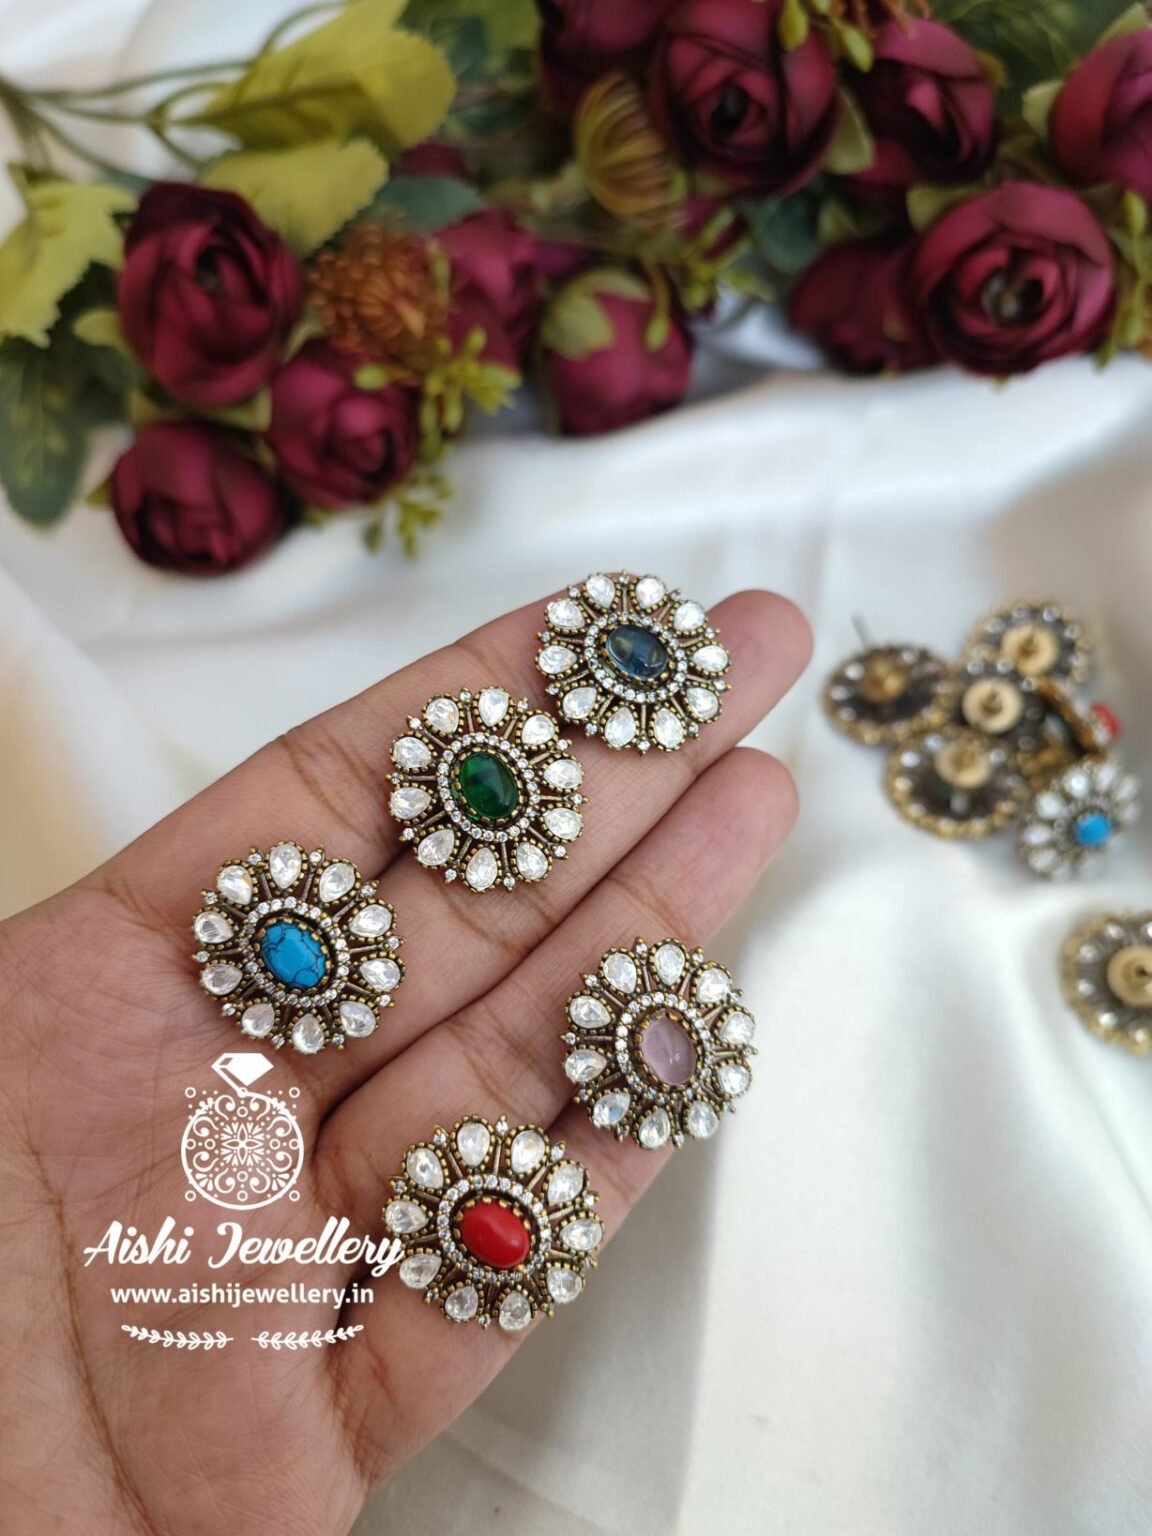 Earrings Archives - Aishi Jewellery - Buy Fashion & Imitation Jewels Online